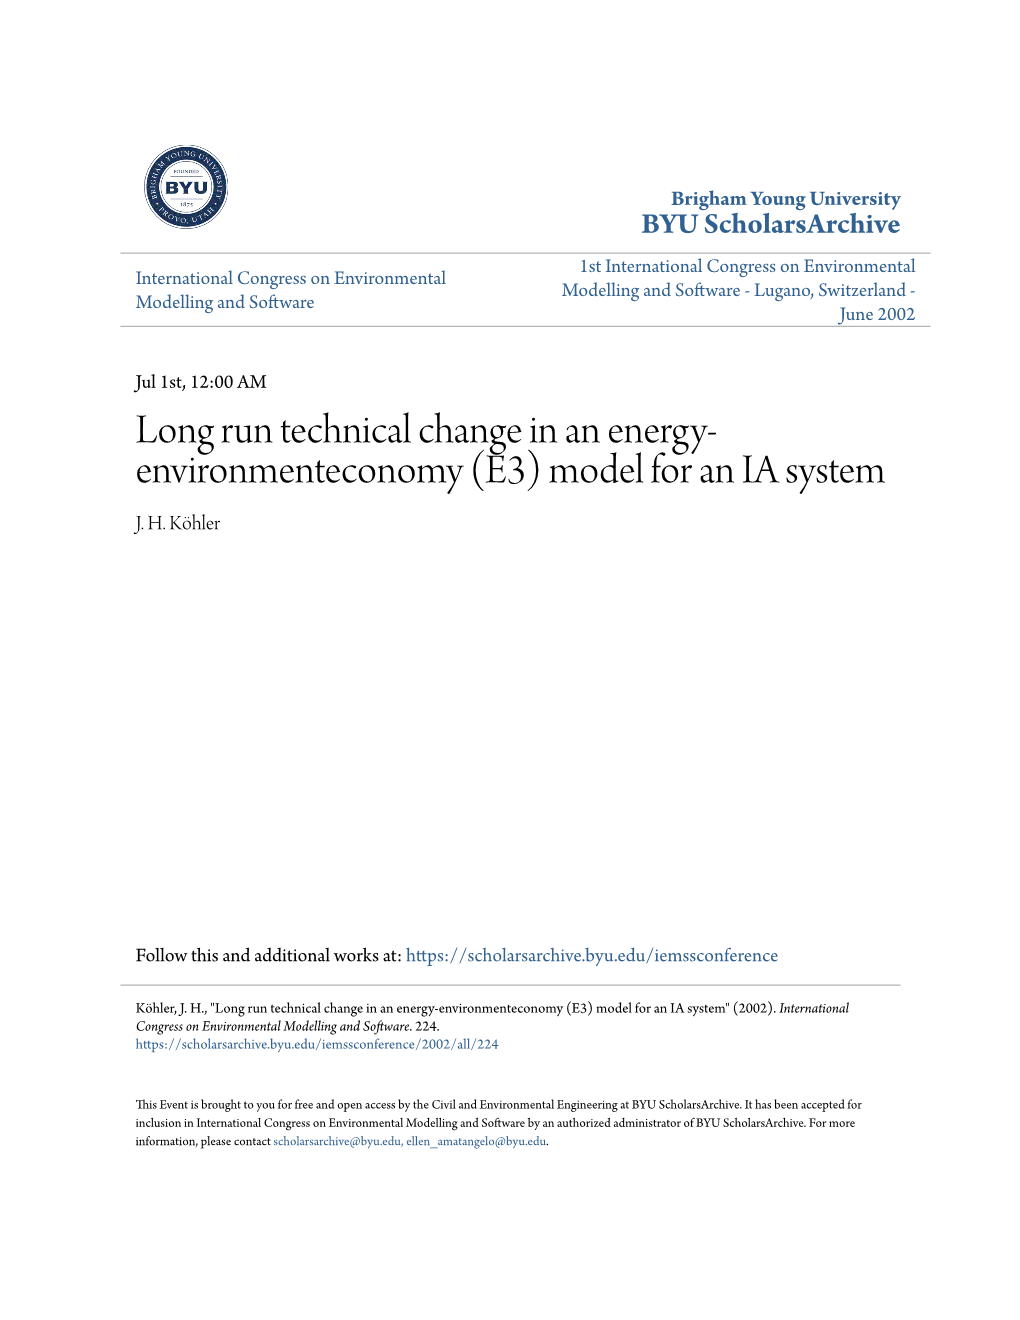 Long Run Technical Change in an Energy-Environmenteconomy (E3) Model for an IA System" (2002)